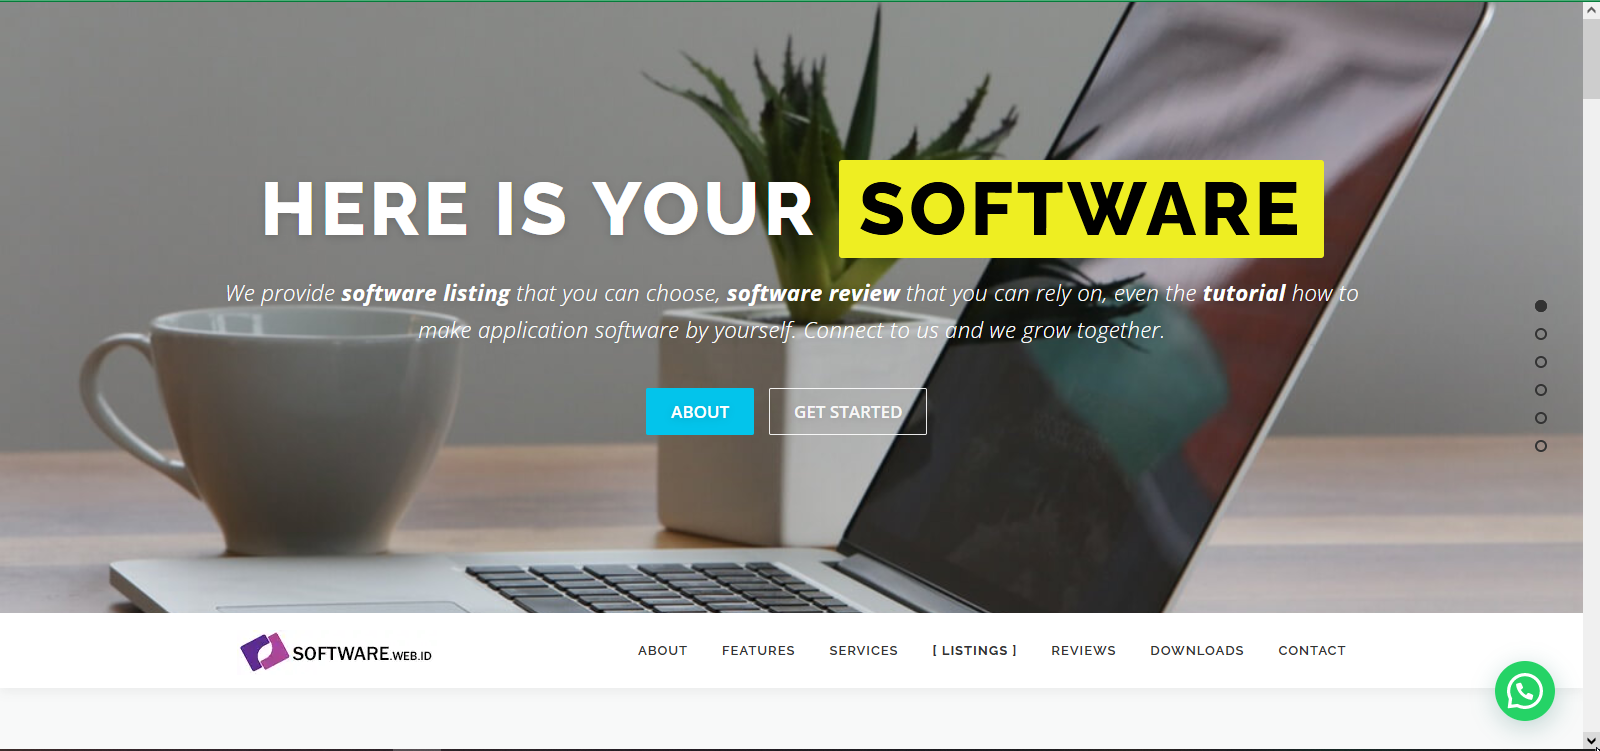 software.web.id